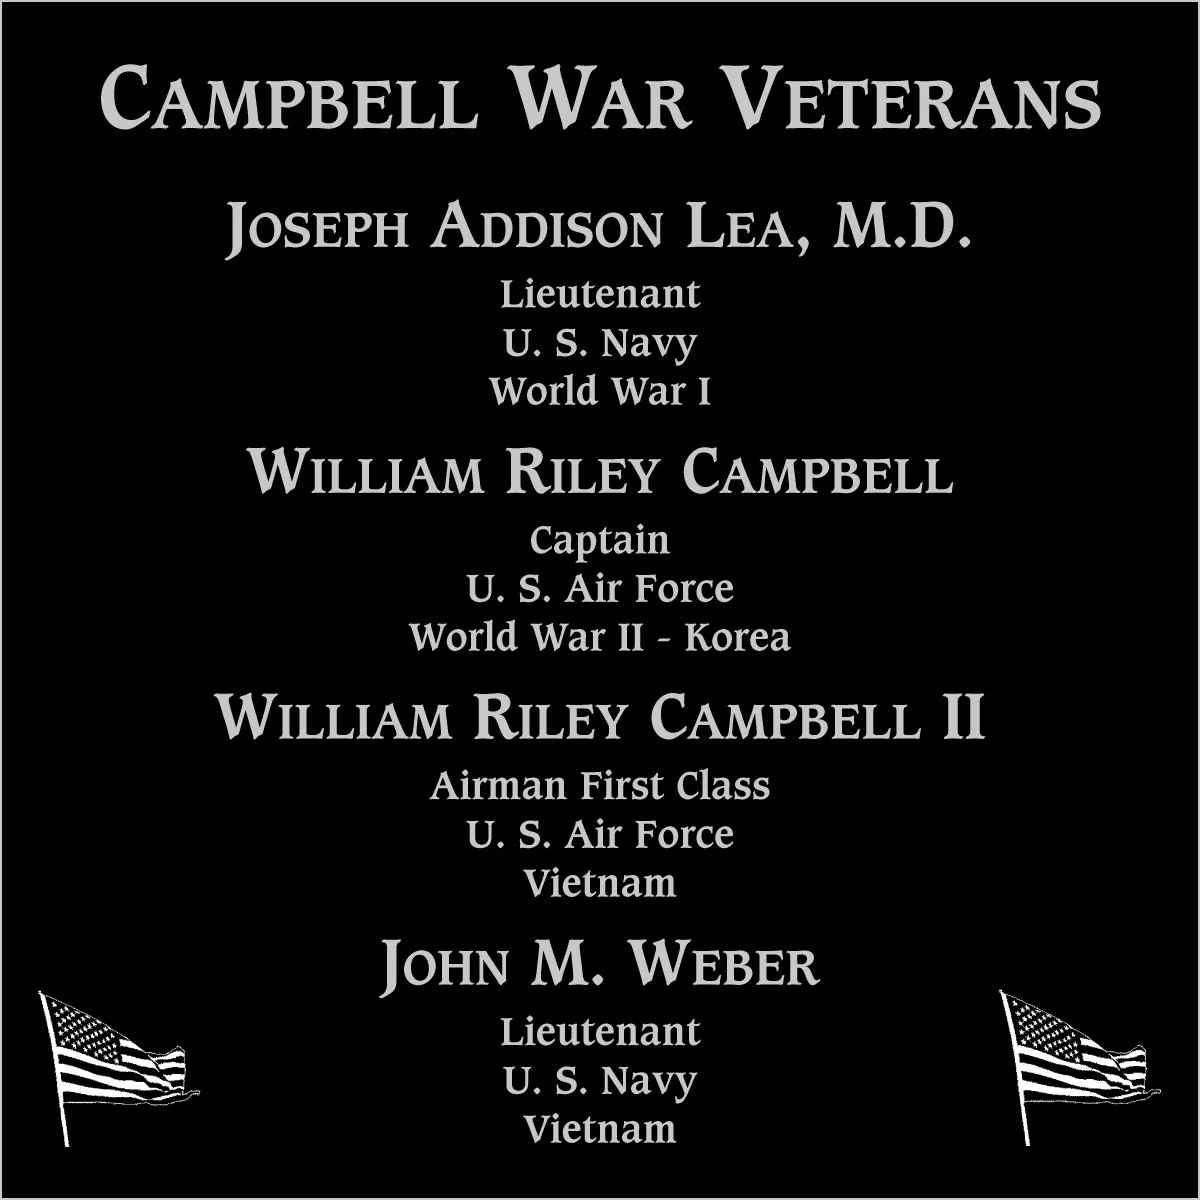 William Riley Campbell ii